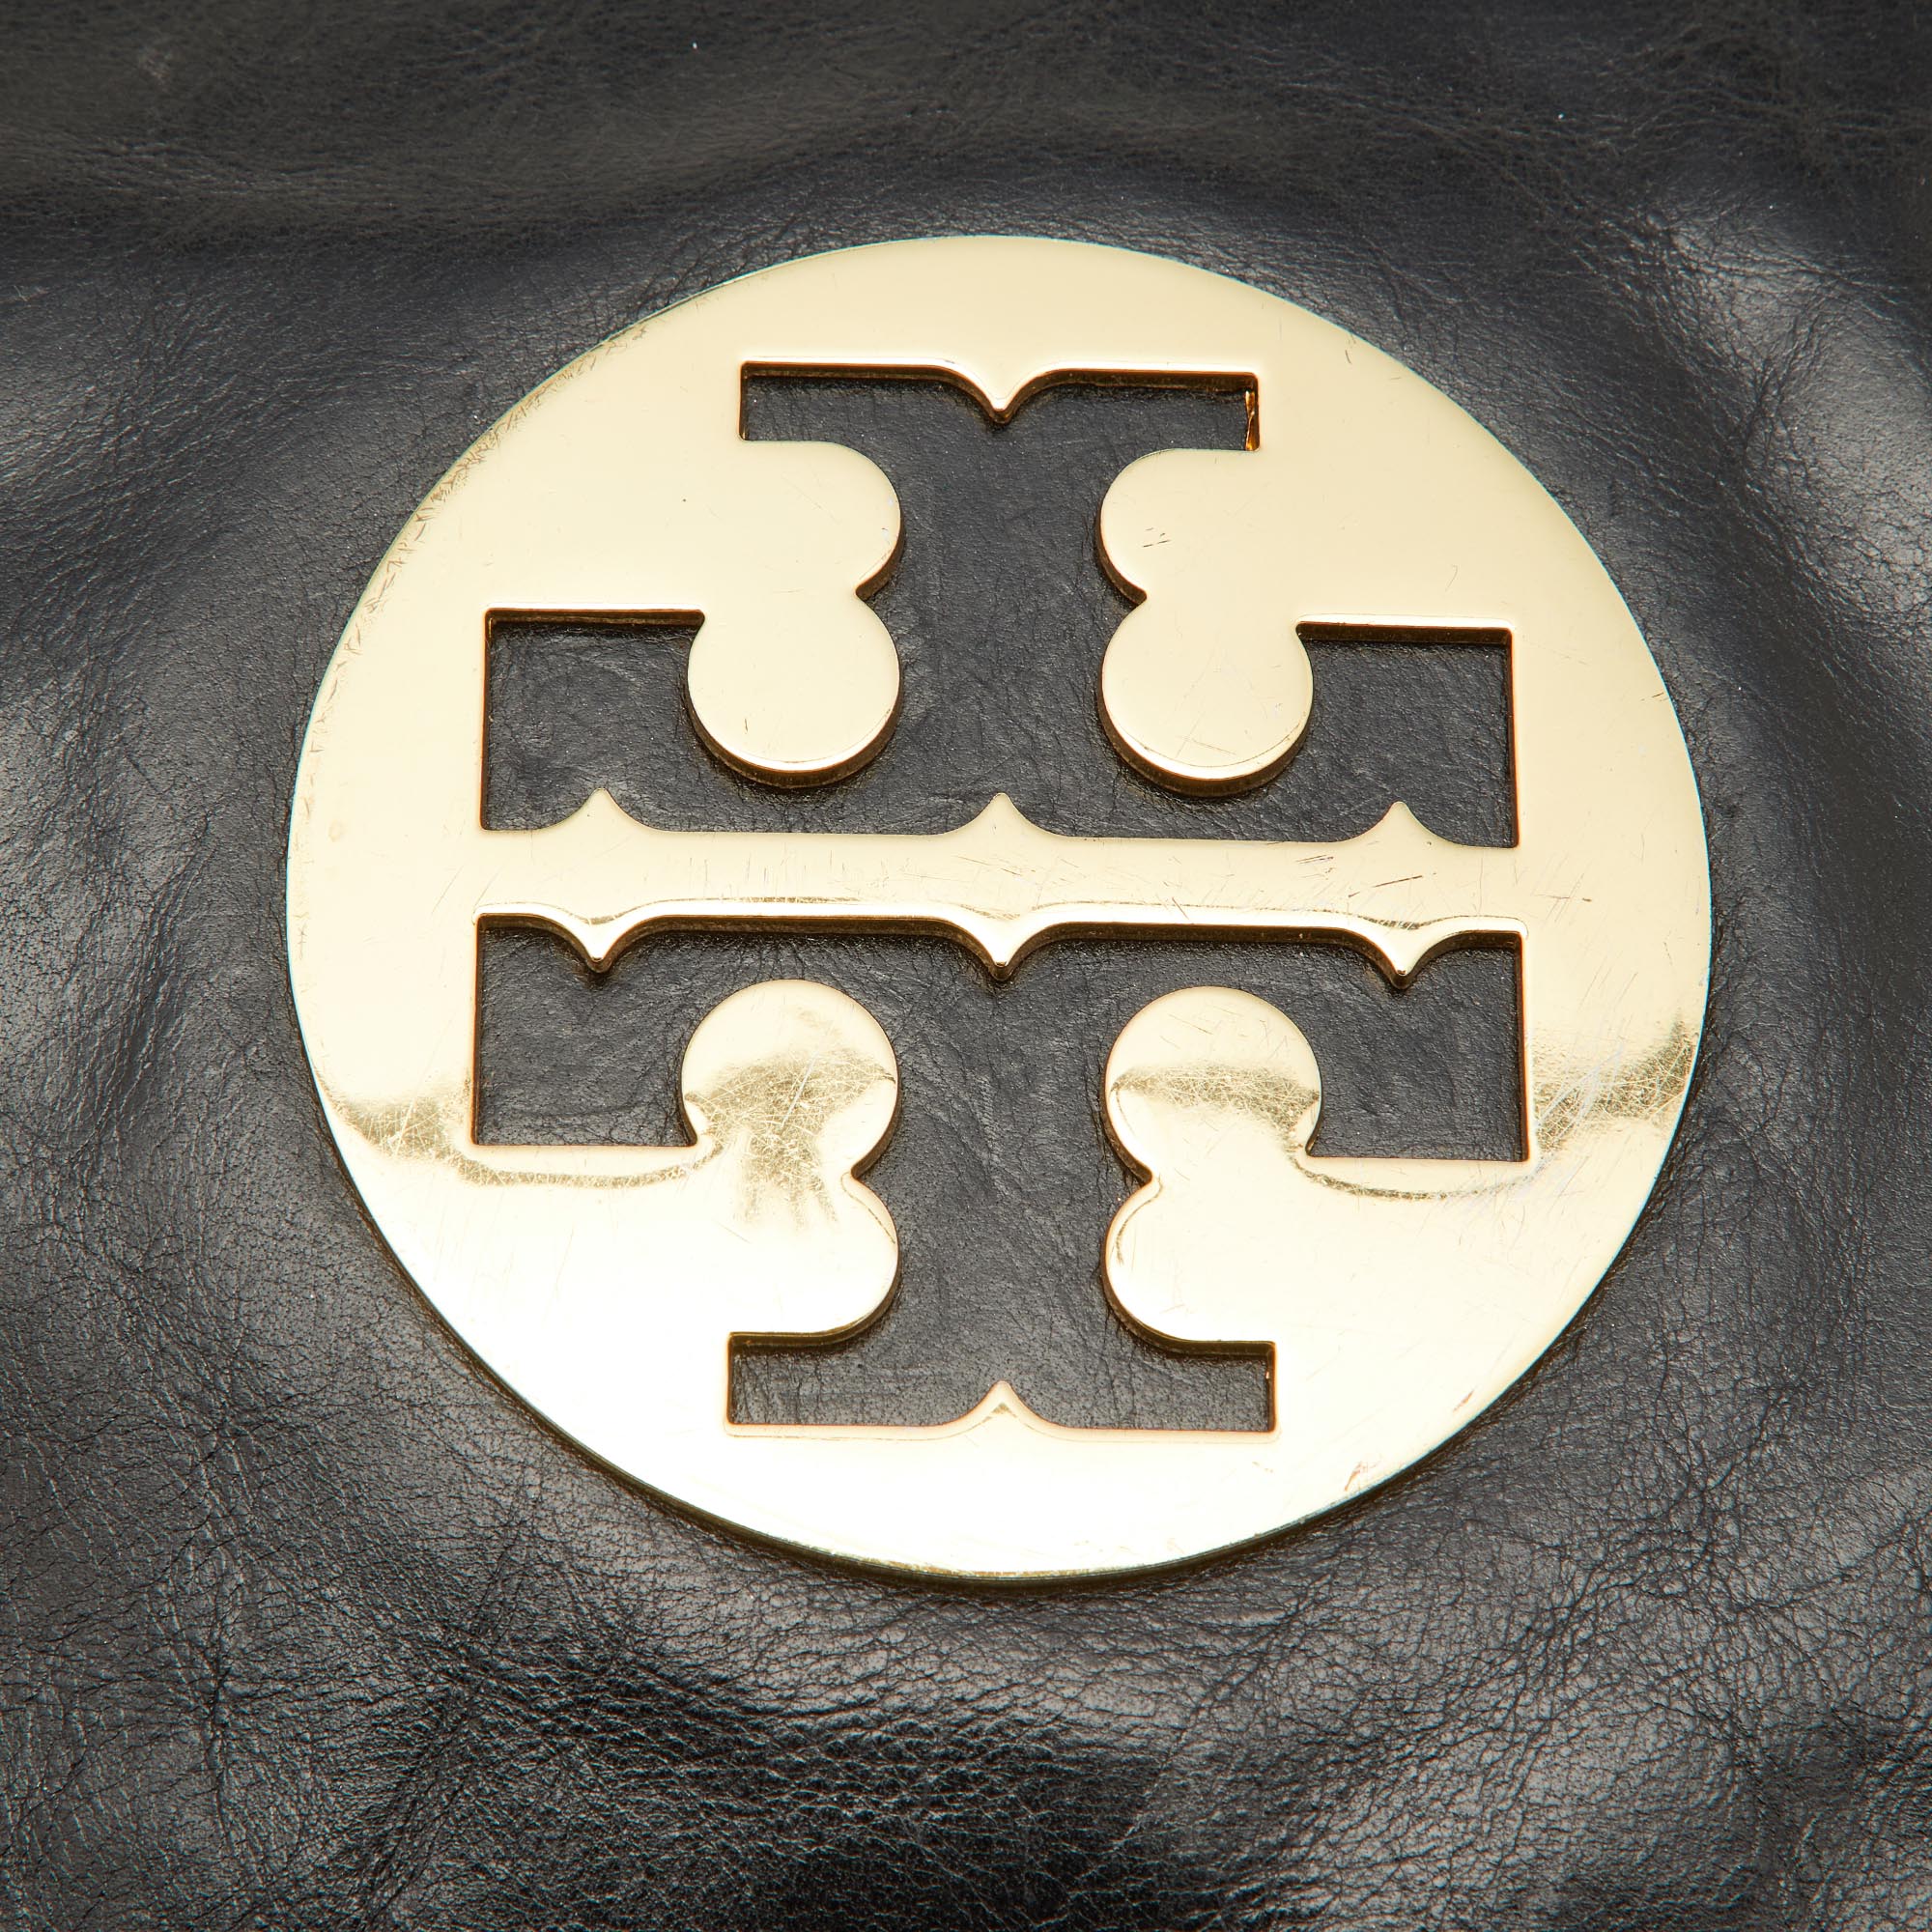 Tory Burch Black Leather Reva Logo Shoulder Bag